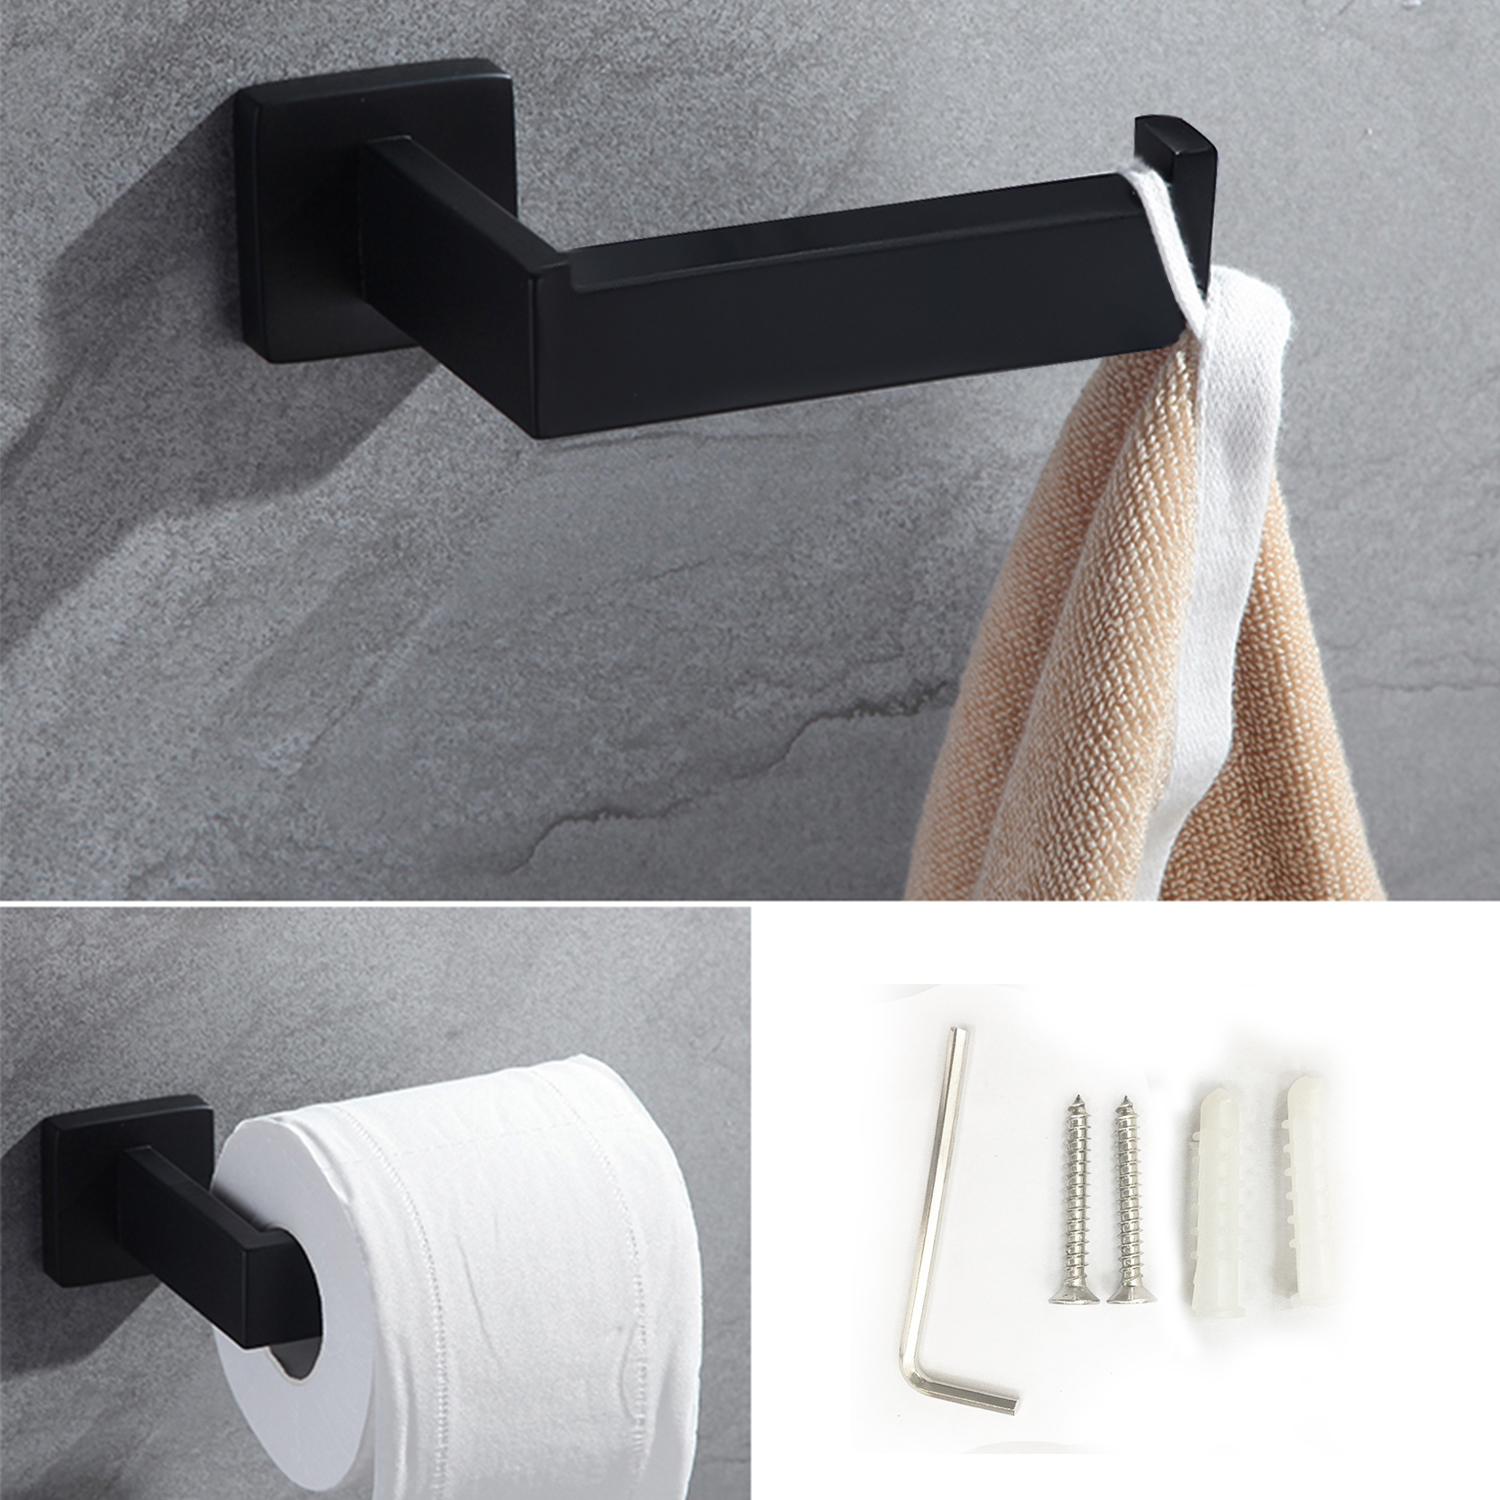 Bathroom Hardware Set 4-Piece Paper Towel Holder Towel Bar Accessories 21-inch Towel Bar Wall Mounted Matte Black Towel Rack Paper Holder Robe Hook